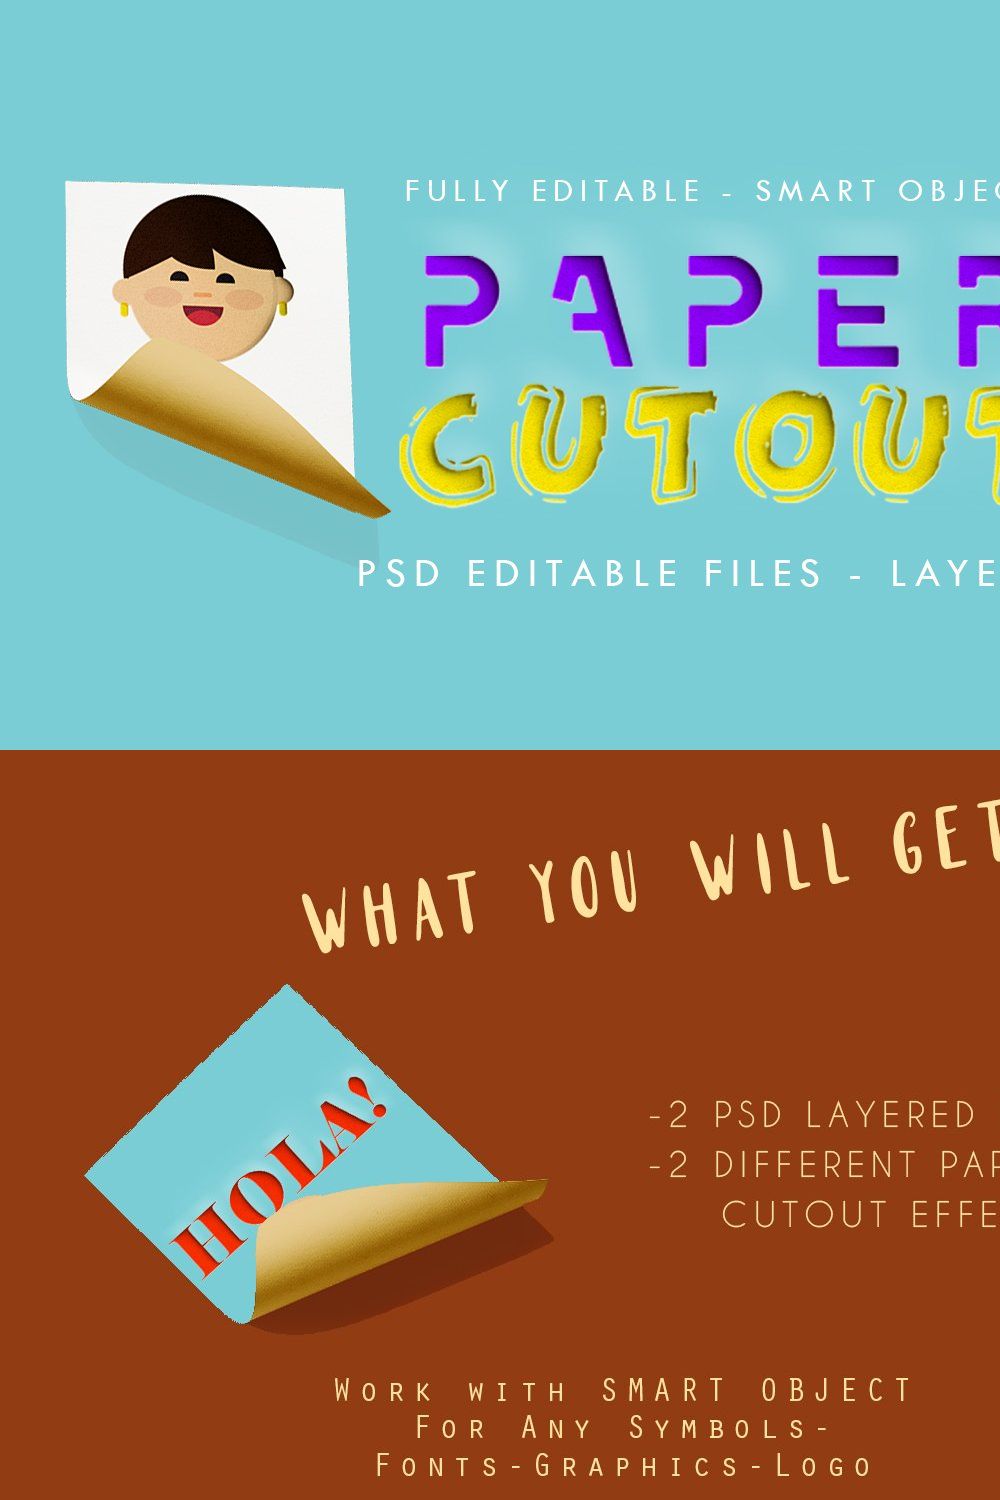 PAPER CUTOUT - Photoshop Layer pinterest preview image.